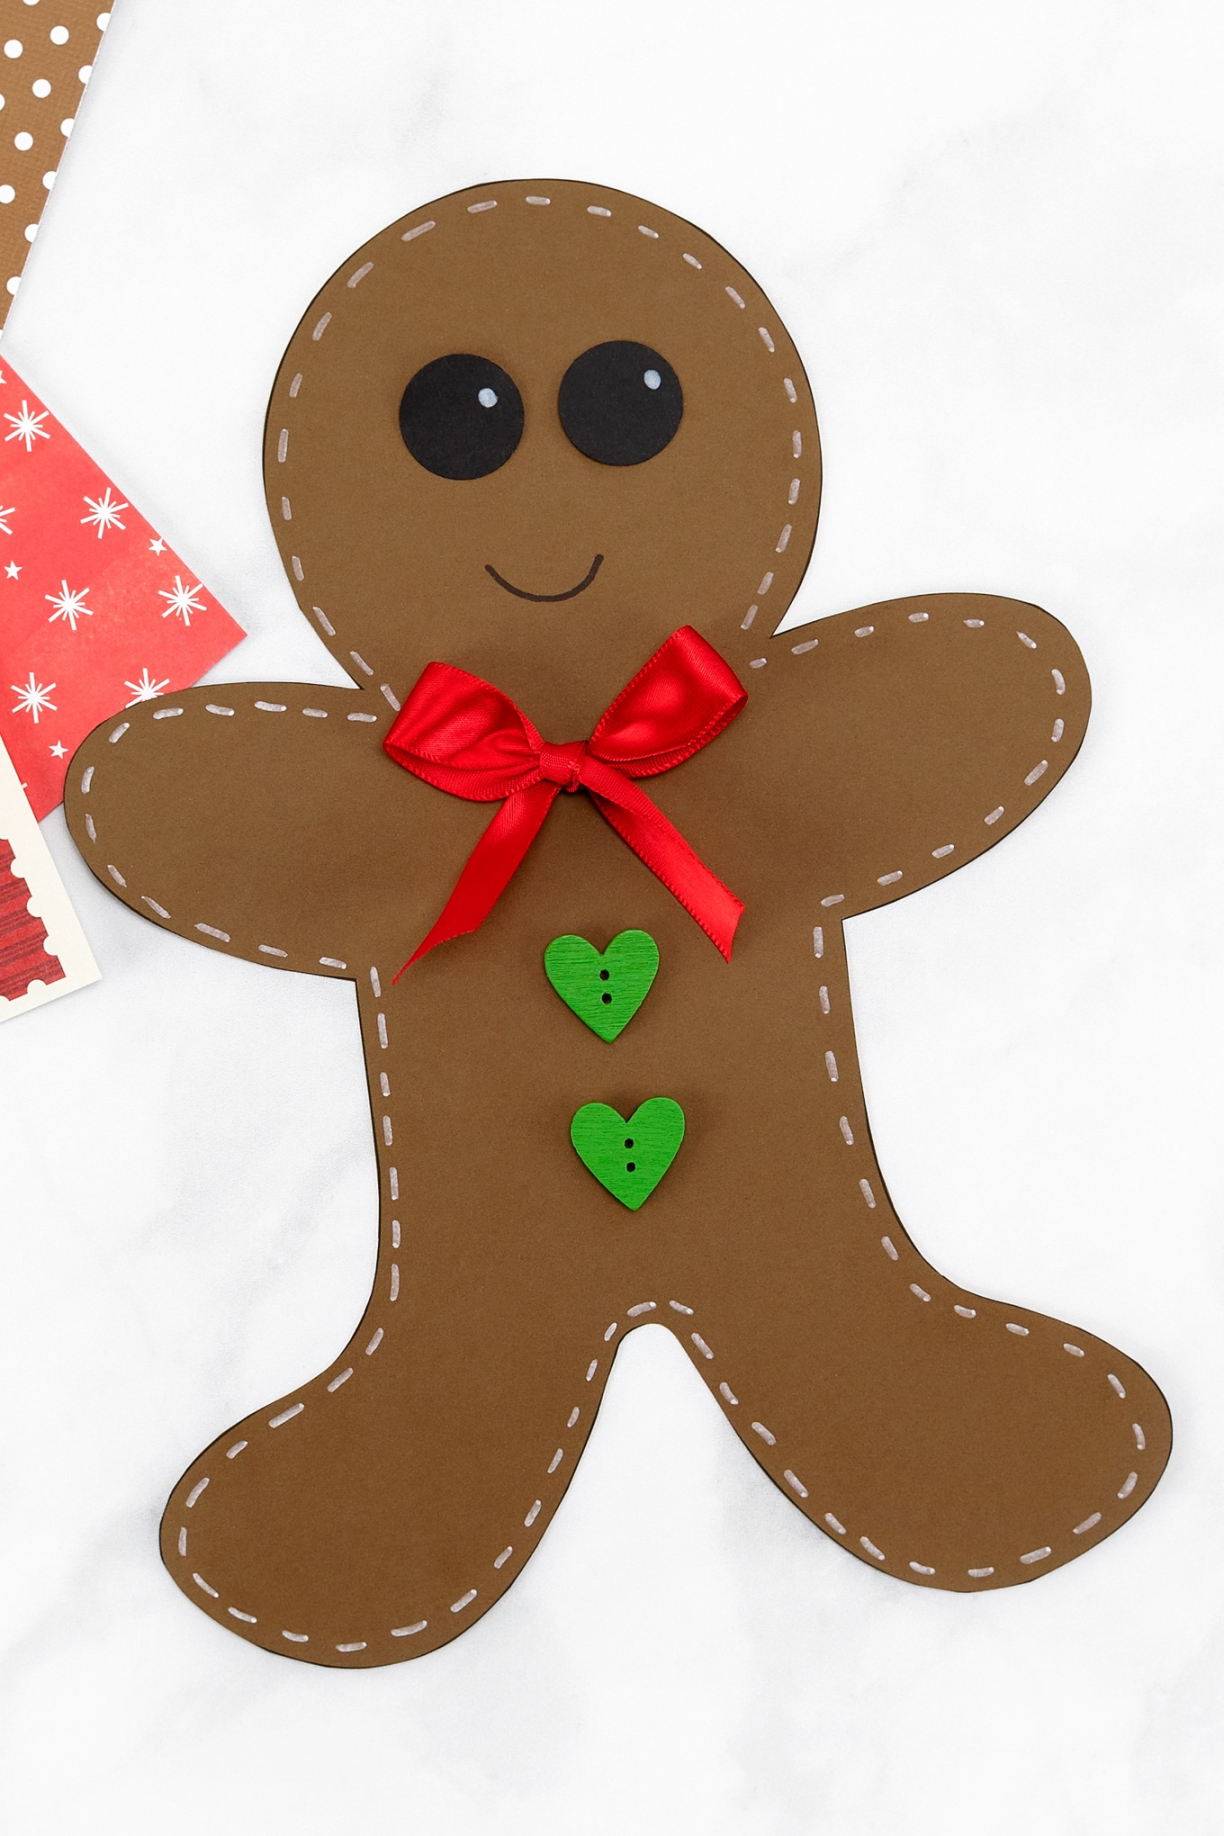 Gingerbread Man Template - Fireflies and Mud Pies - FREE Printables - Printable Gingerbread Man Craft